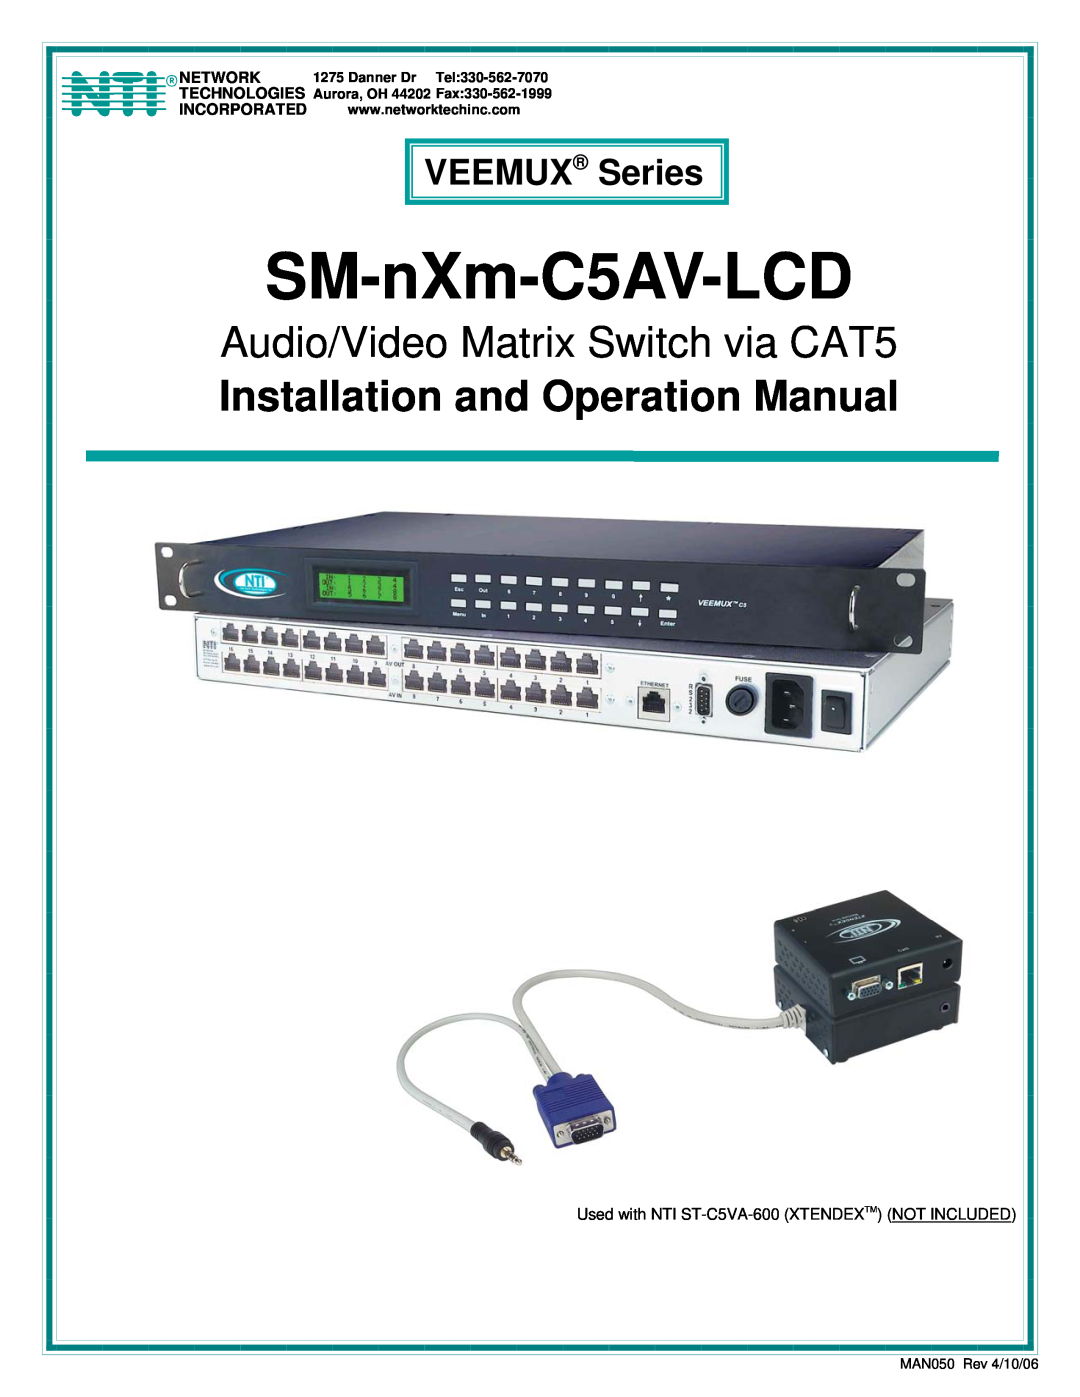 Network Technologies SM-nXm-C5AV-LCD operation manual Audio/Video Matrix Switch via CAT5, VEEMUX Series, R Network 